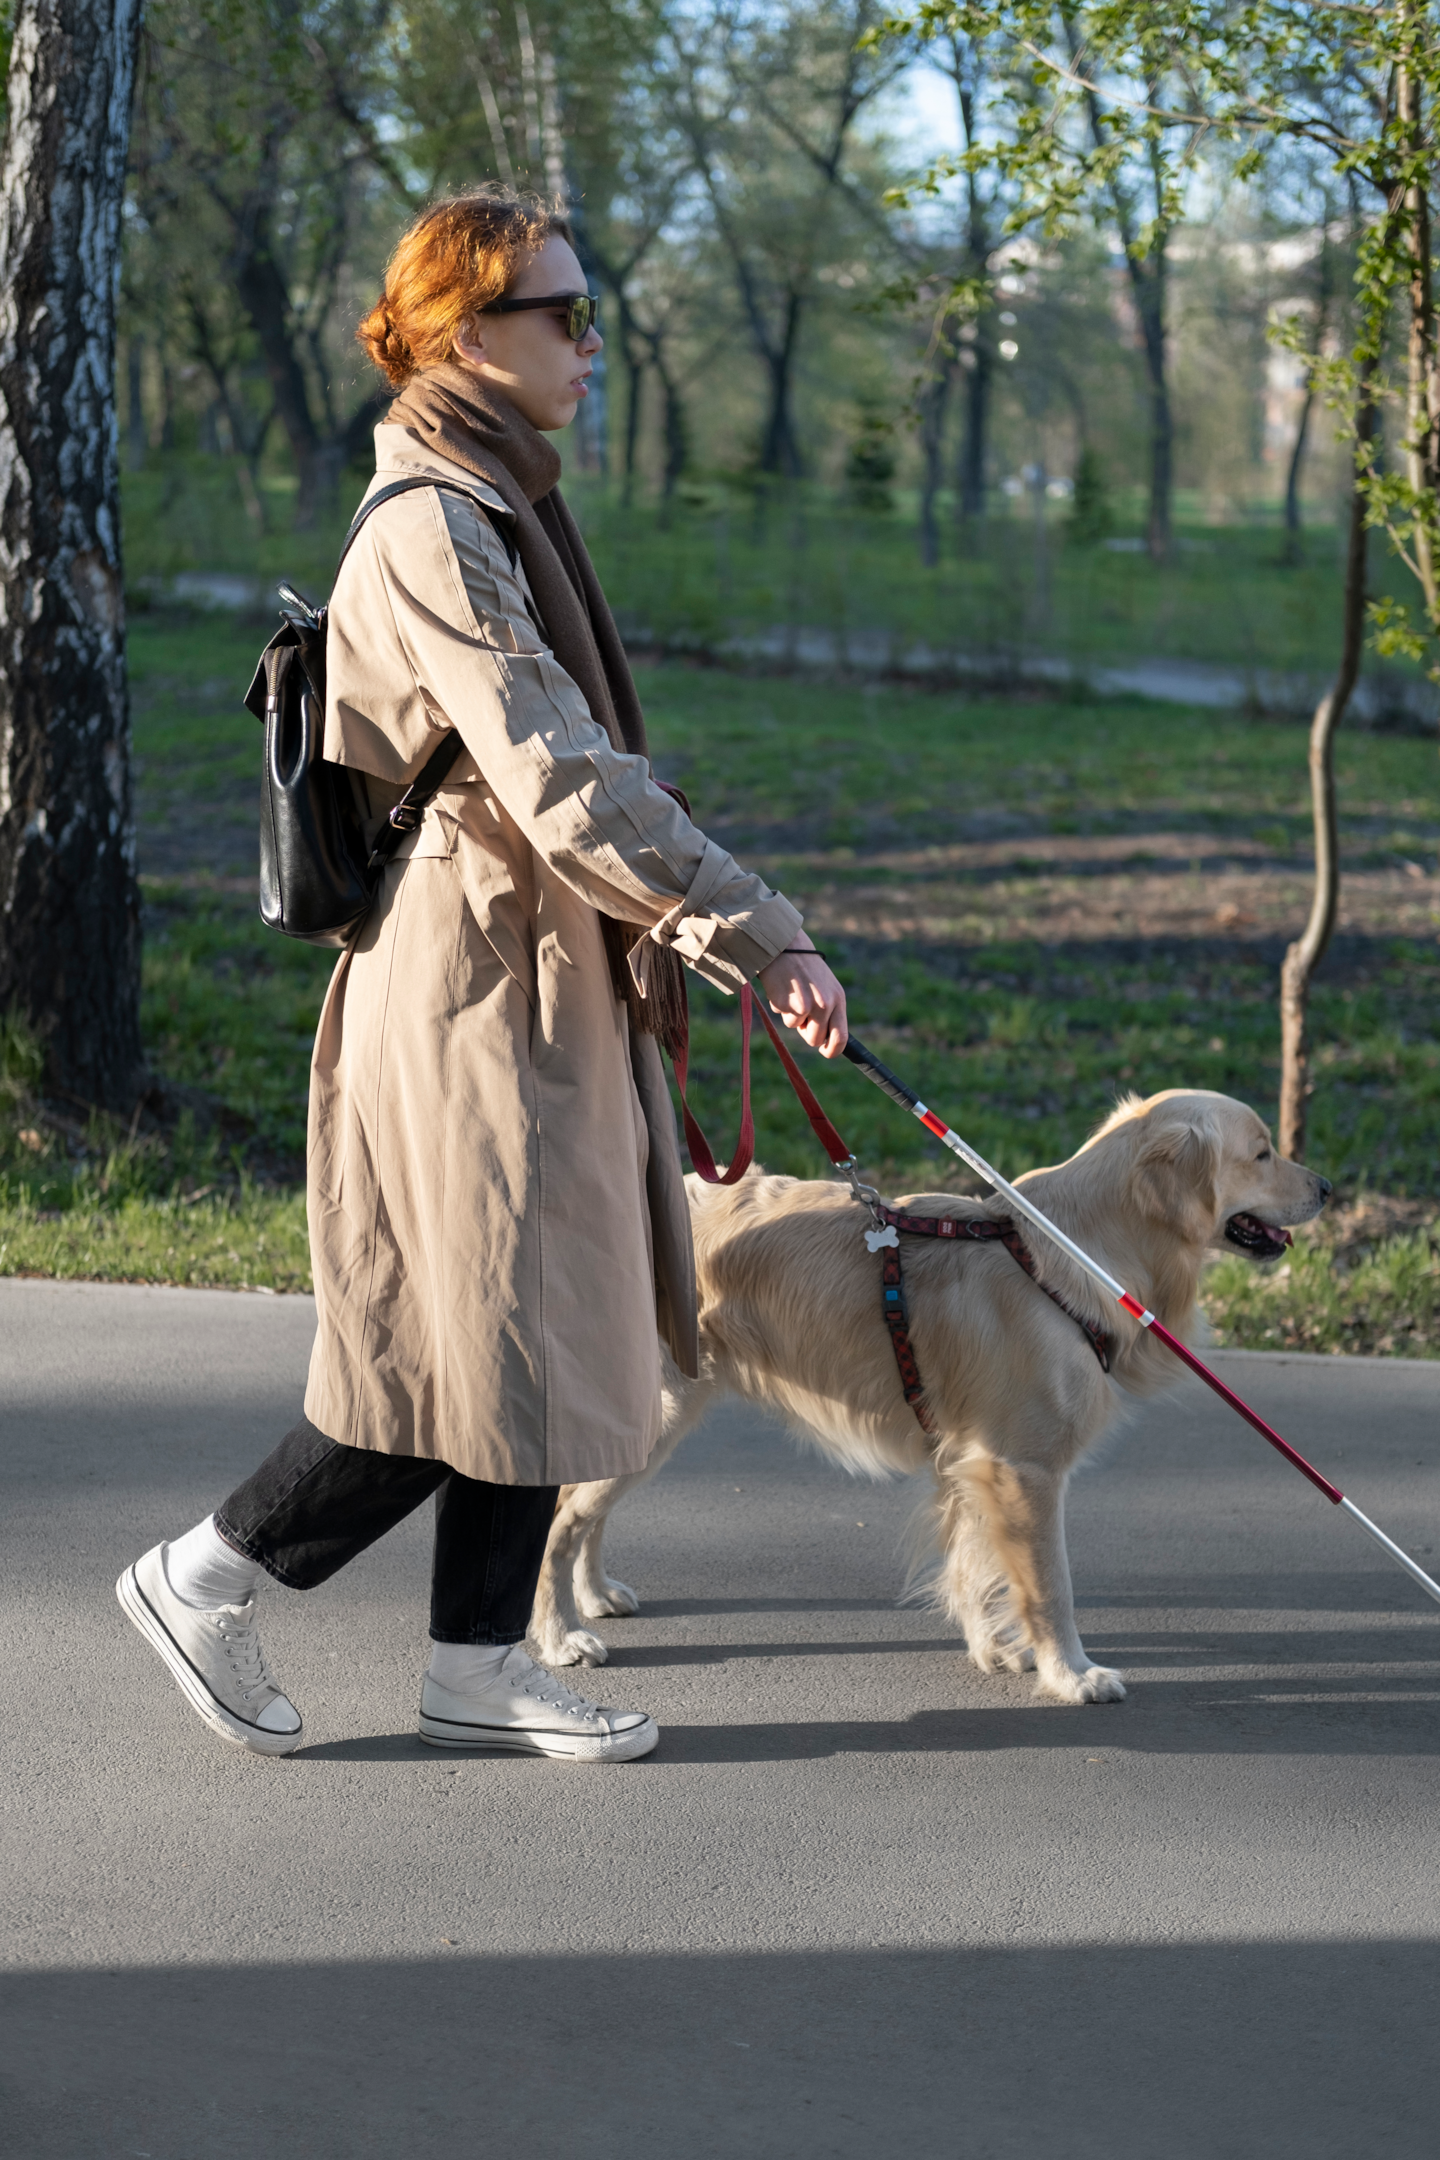 Blind person walking dog (scene understanding in computer vision).